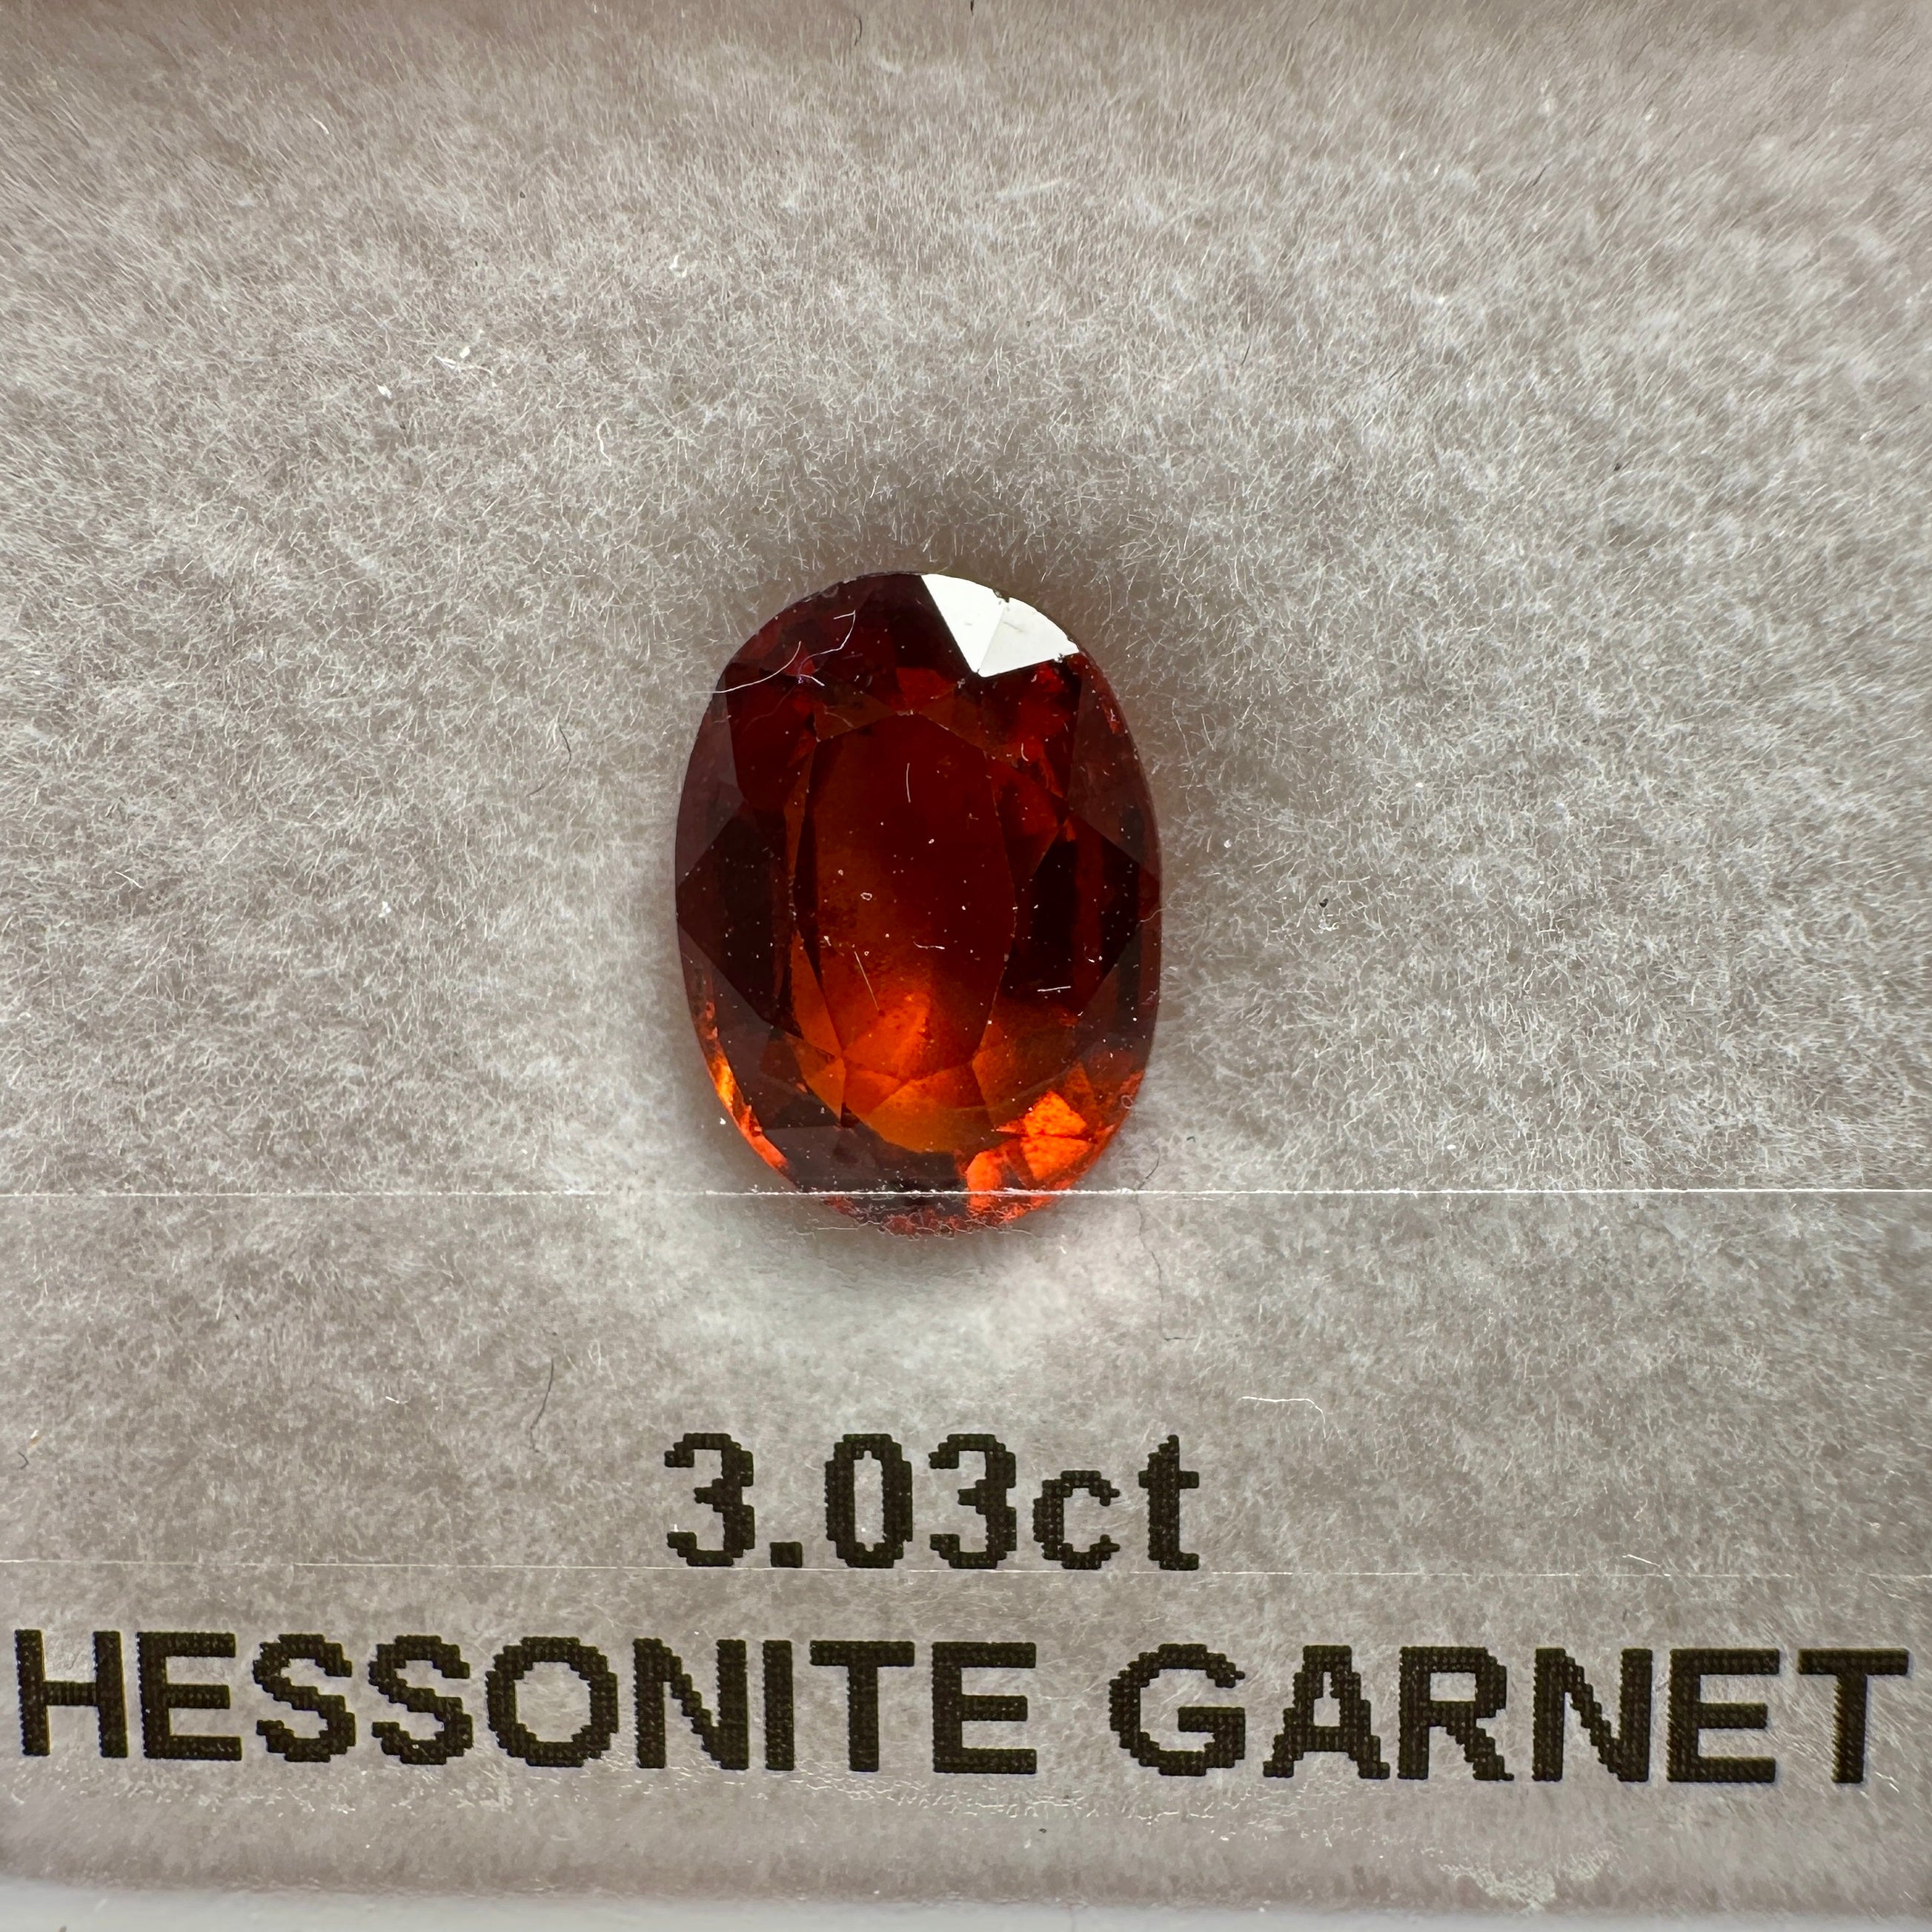 3.03ct Hessonite Garnet, Untreated Unheated, native cut